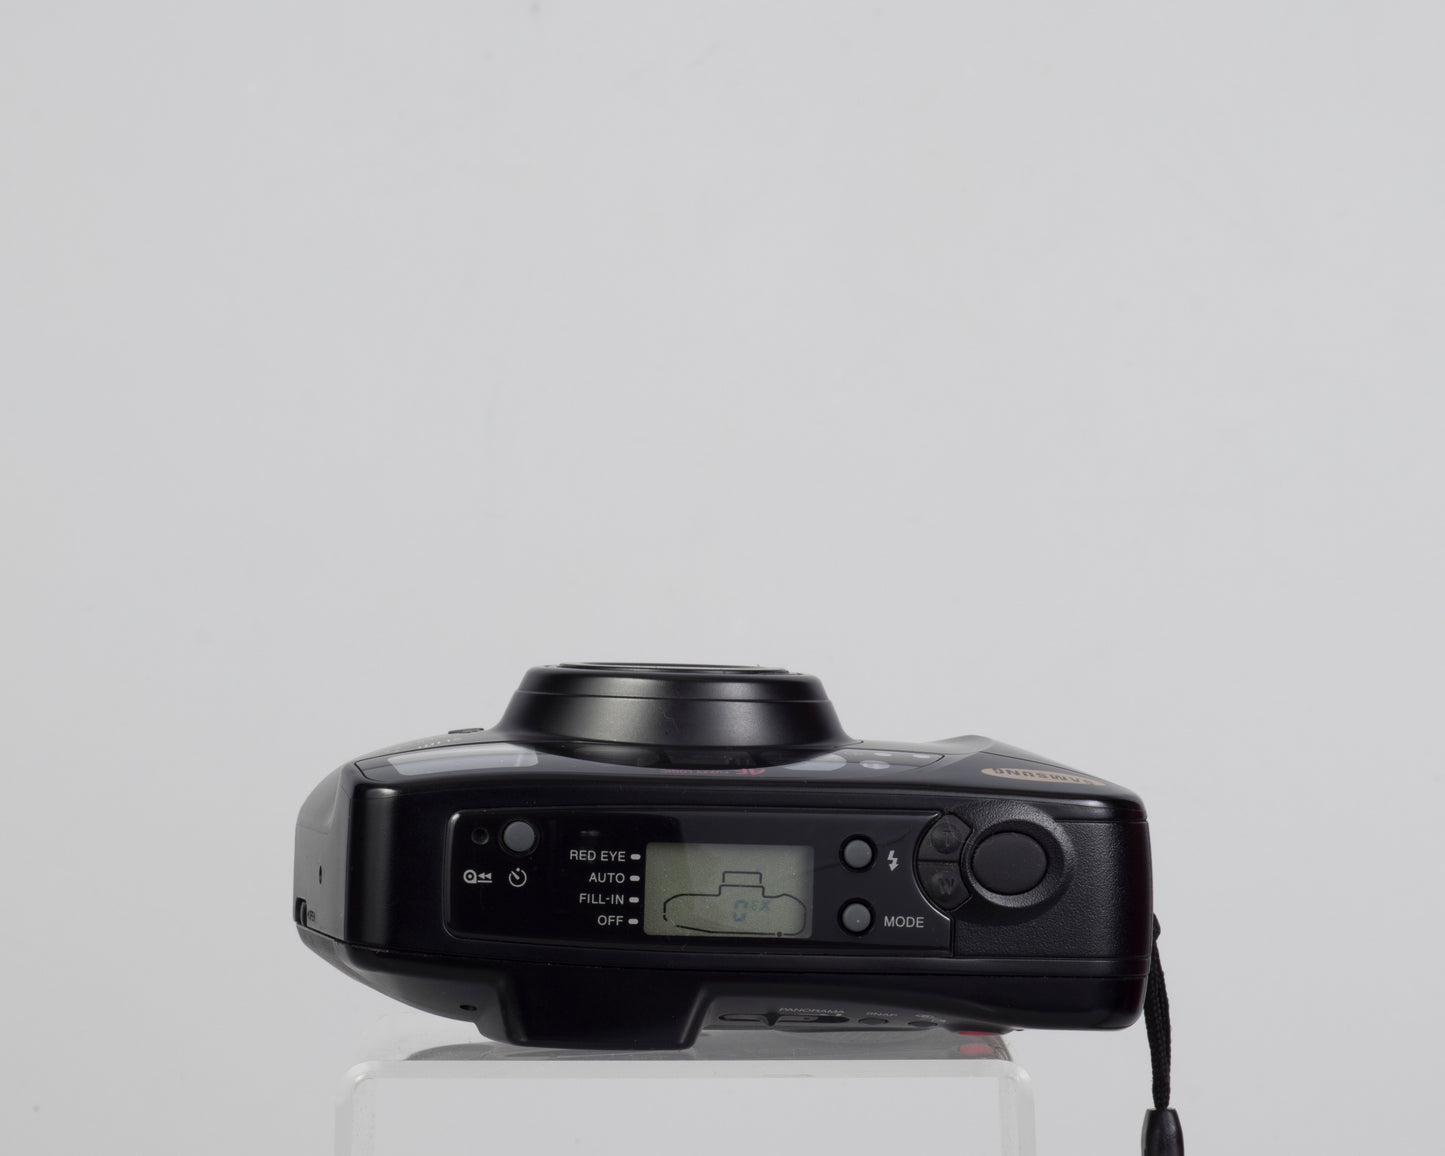 Samsung Slim Zoom 290W (Rollei Prego 90) 35mm camera w/case